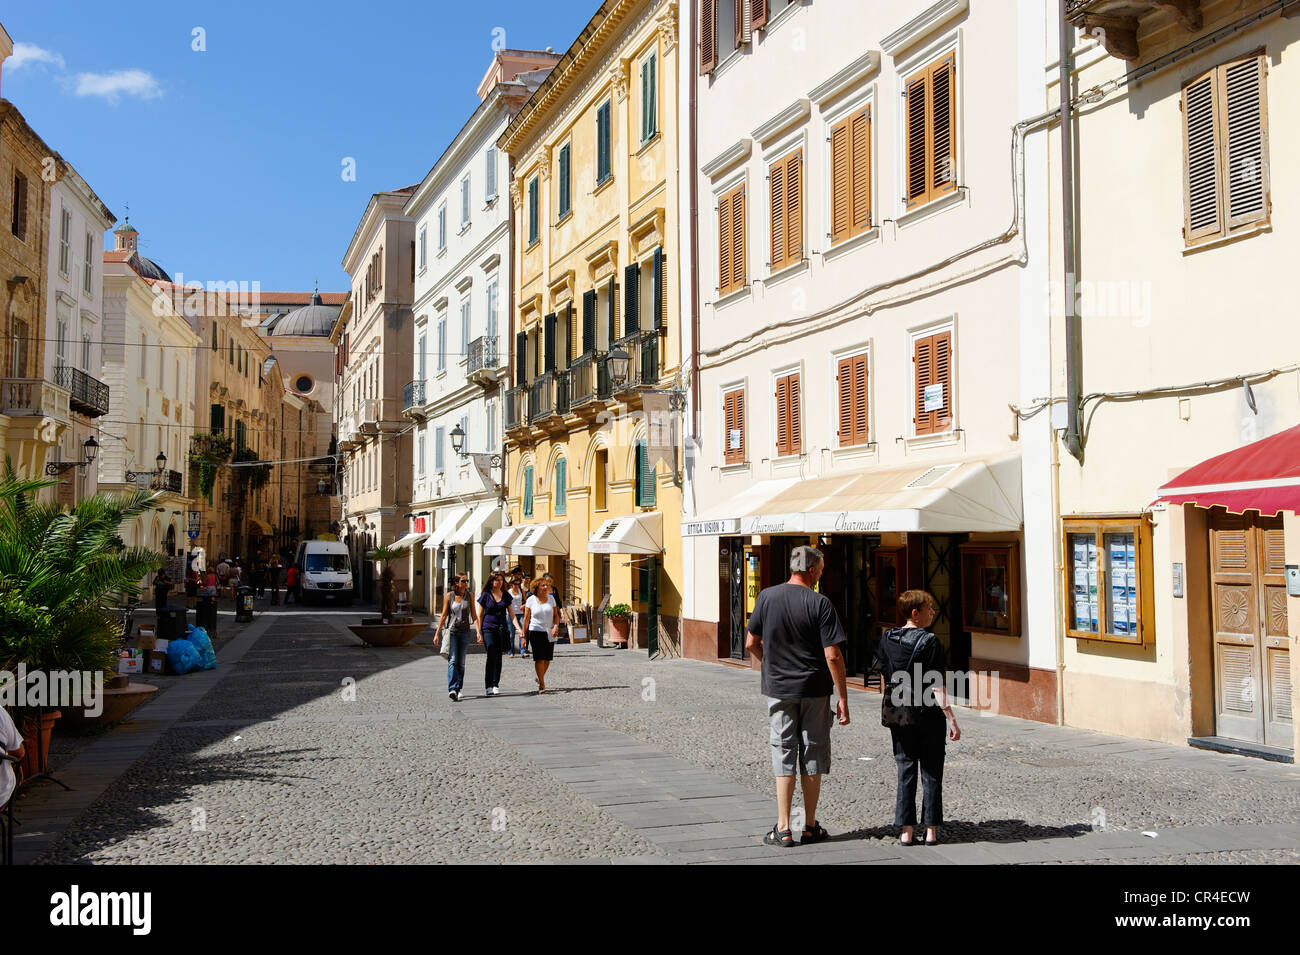 Piazza Civica, Alghero, west coast of Sardinia, Italy, Europe Stock Photo